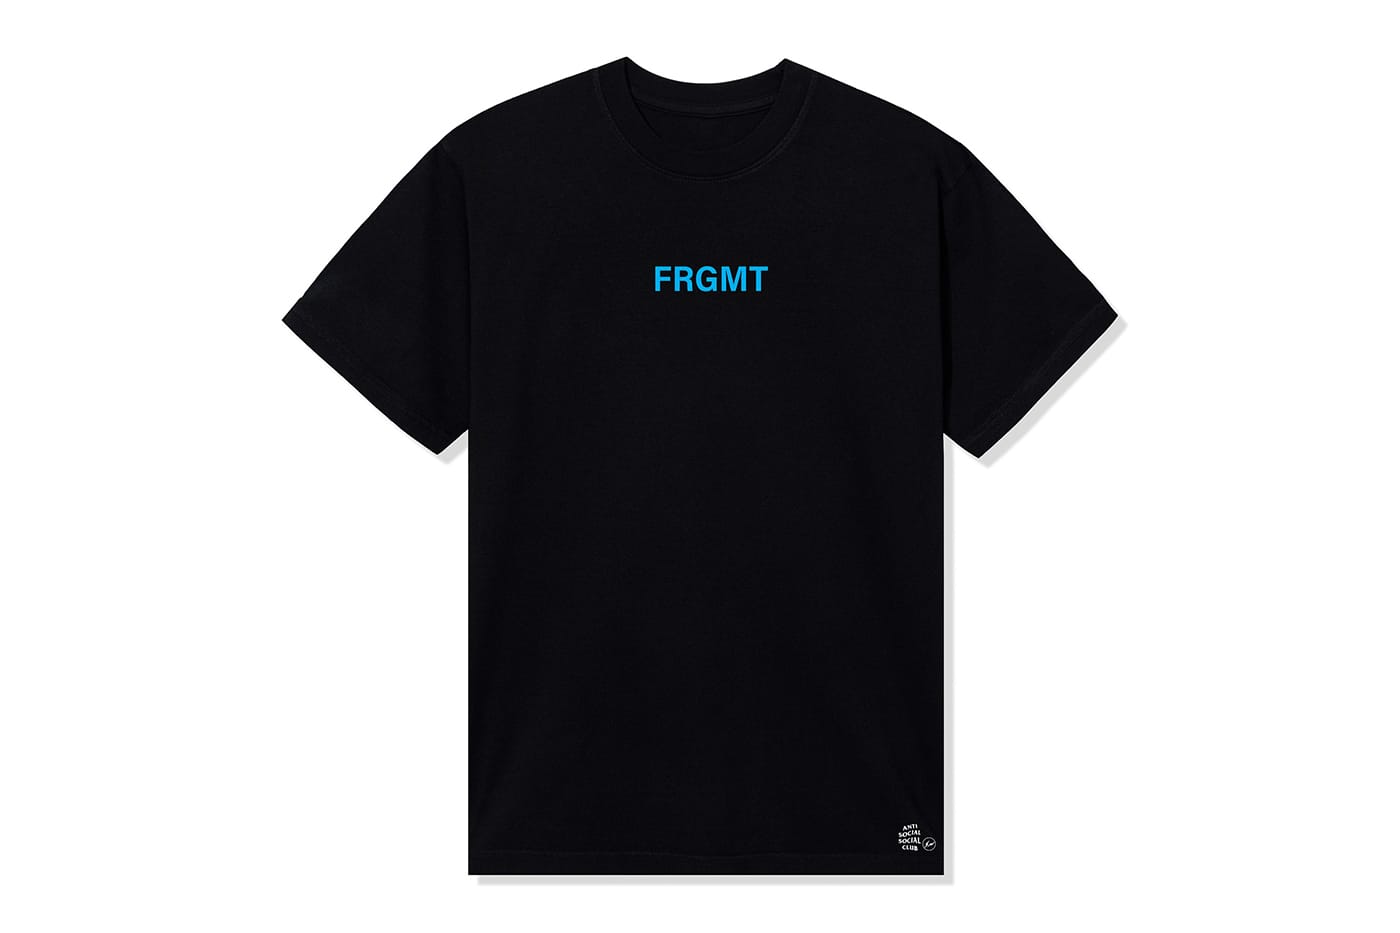 WEEKEND FRGMT ANTI SOCIAL SOCIAL Tシャツ フラグメントデザイン